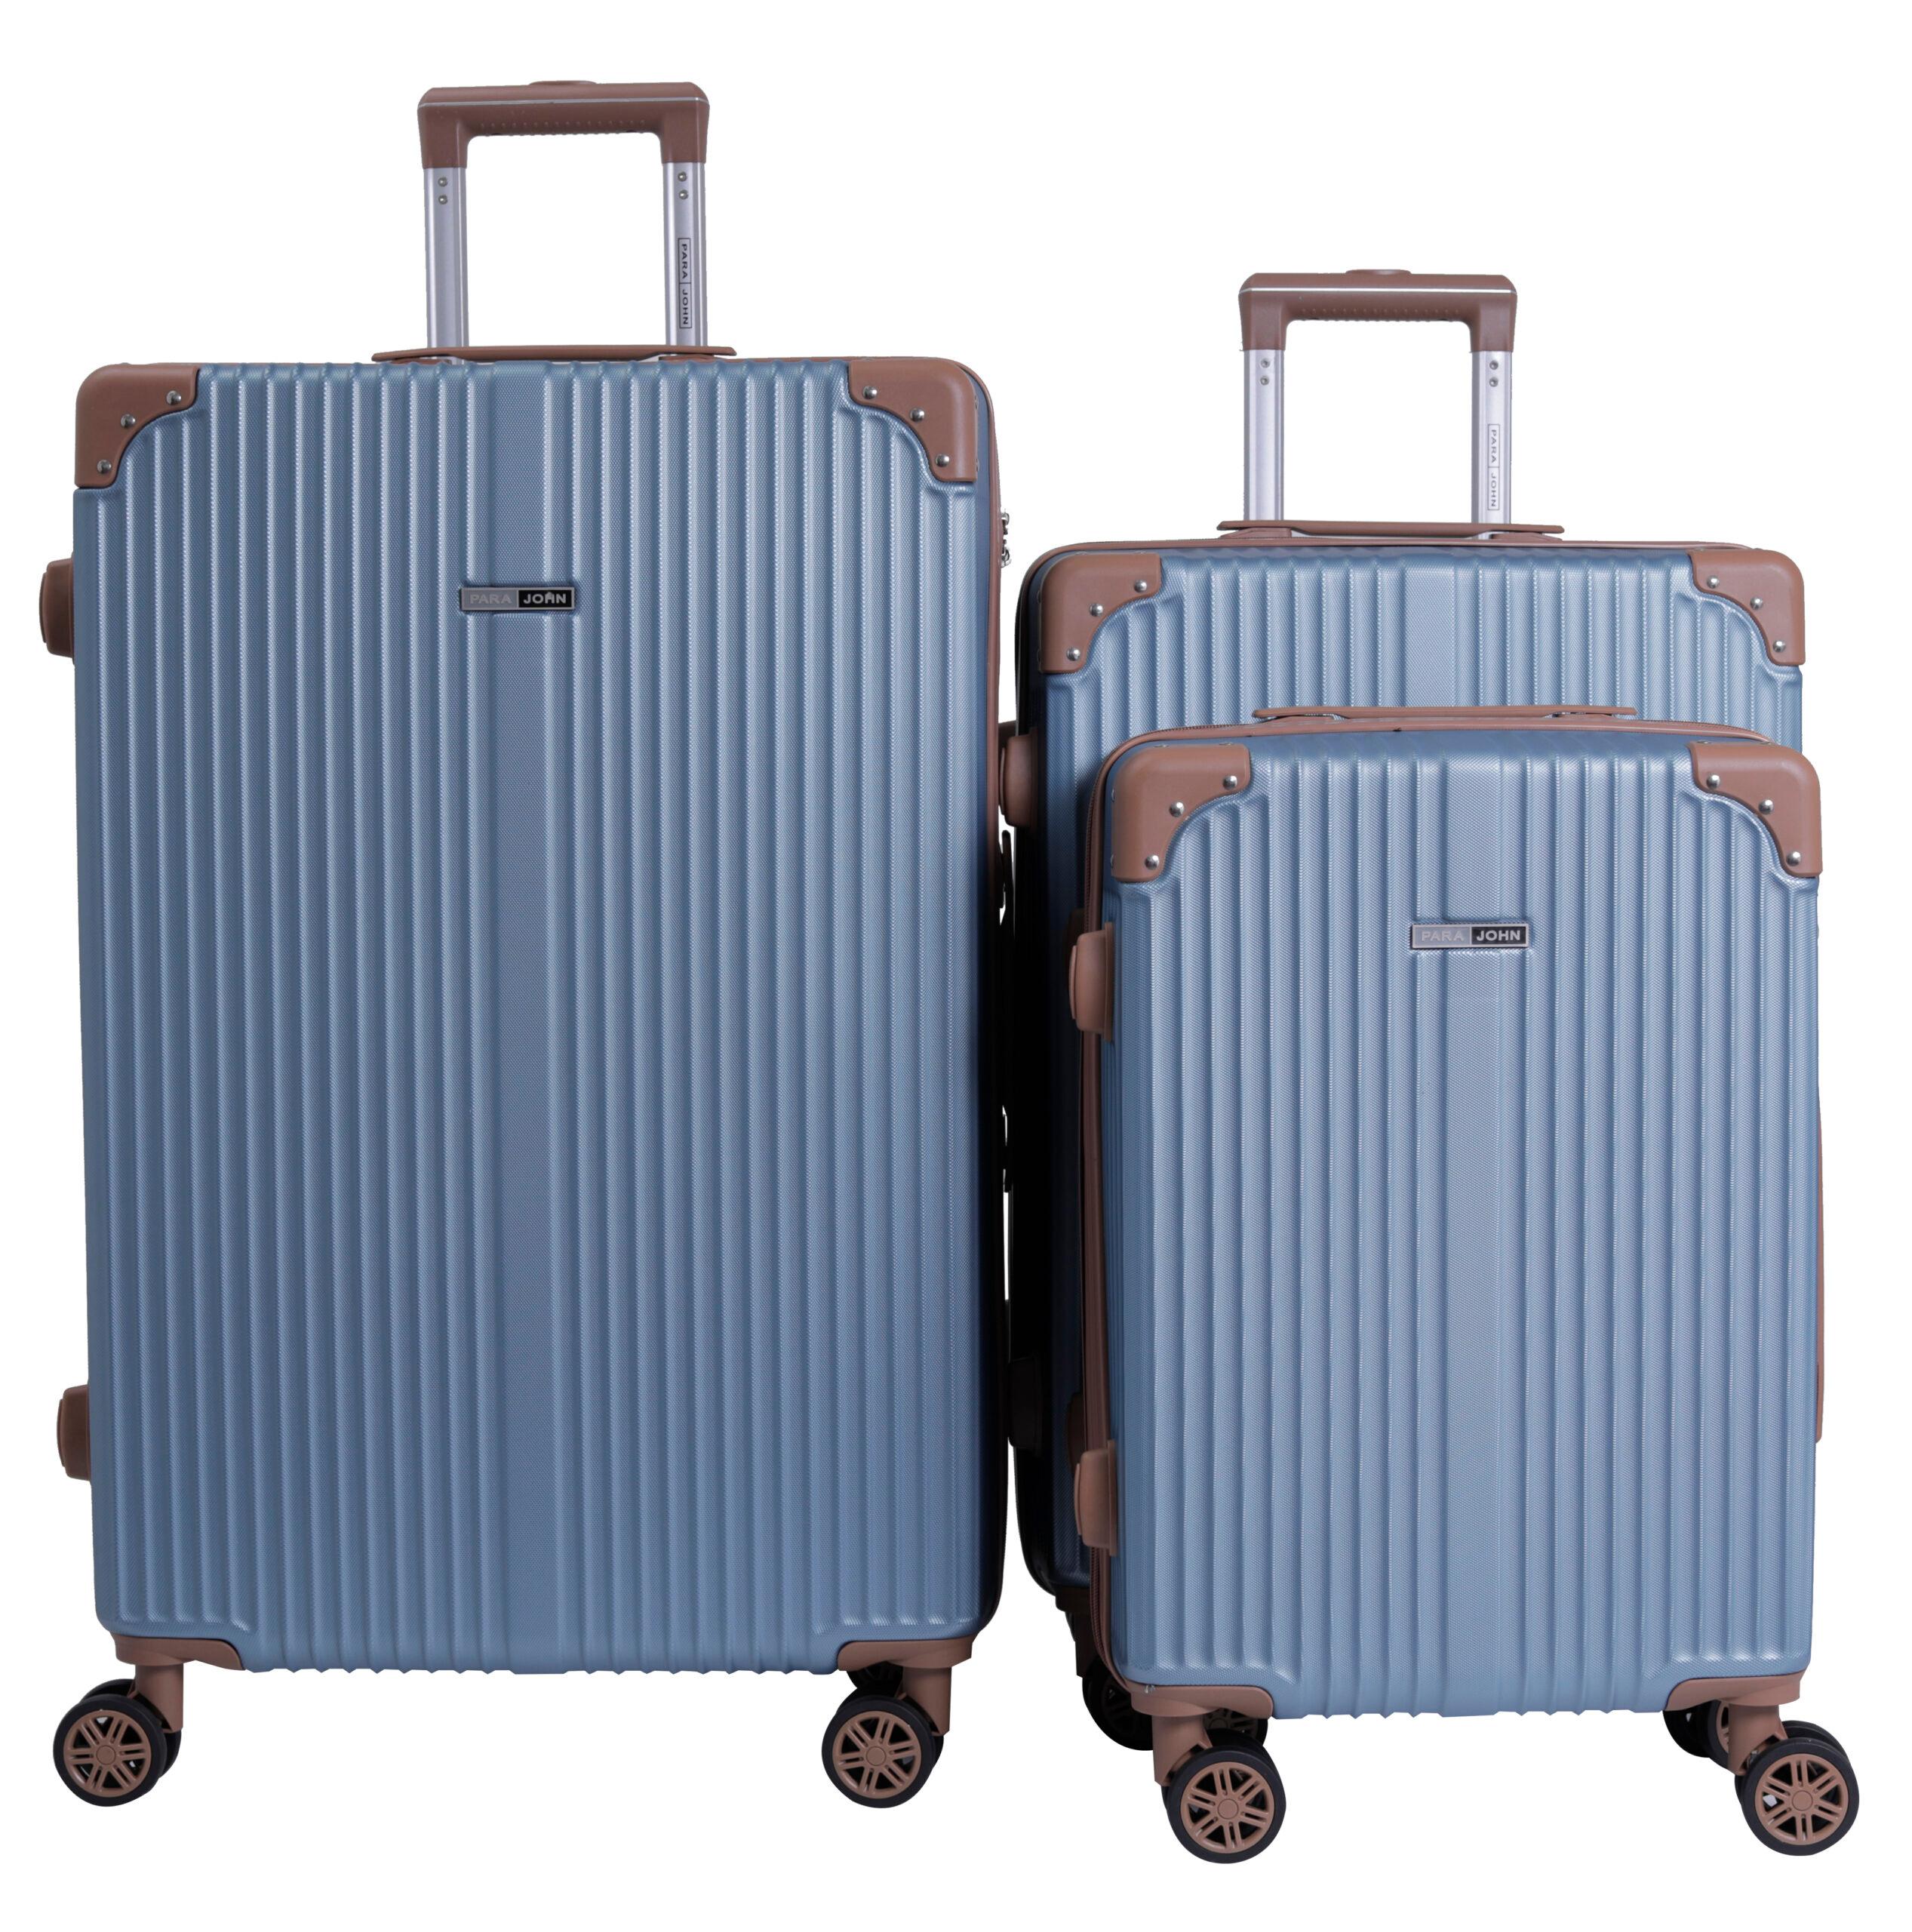 طقم حقائب سفر 3 حقائب مادة PP بعجلات دوارة (20 ، 24 ، 28) بوصة أزرق PARA JOHN - Travel Luggage Suitcase Set of 3 - Trolley Bag, Carry On Hand Cabin Luggage Bag - Lightweight (20 ، 24 ، 28) inch